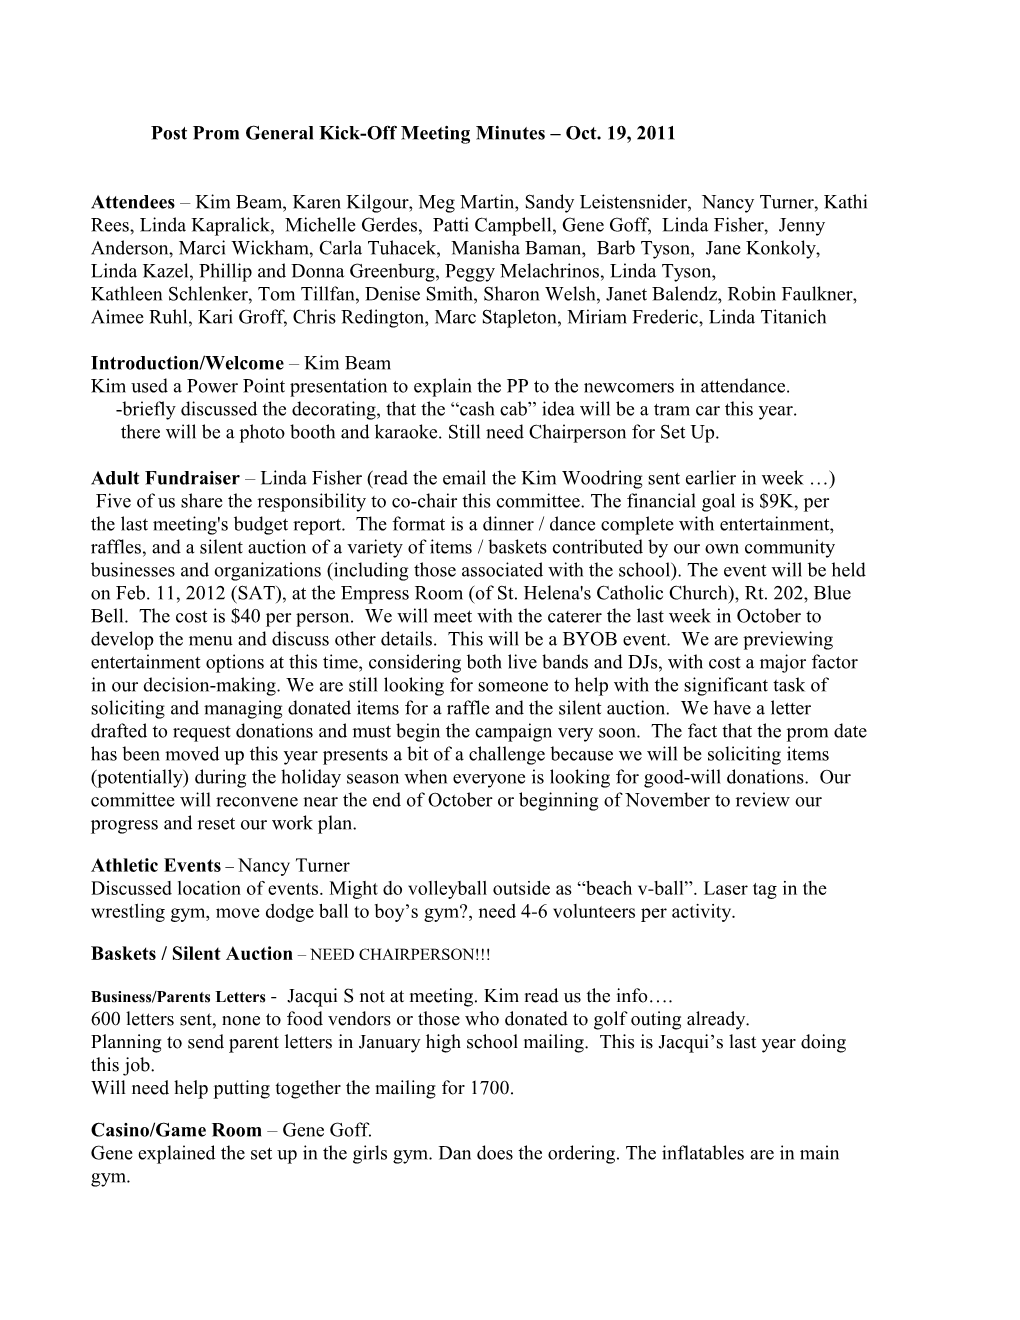 Post Prom Steering Committee Minutes September 22, 2011